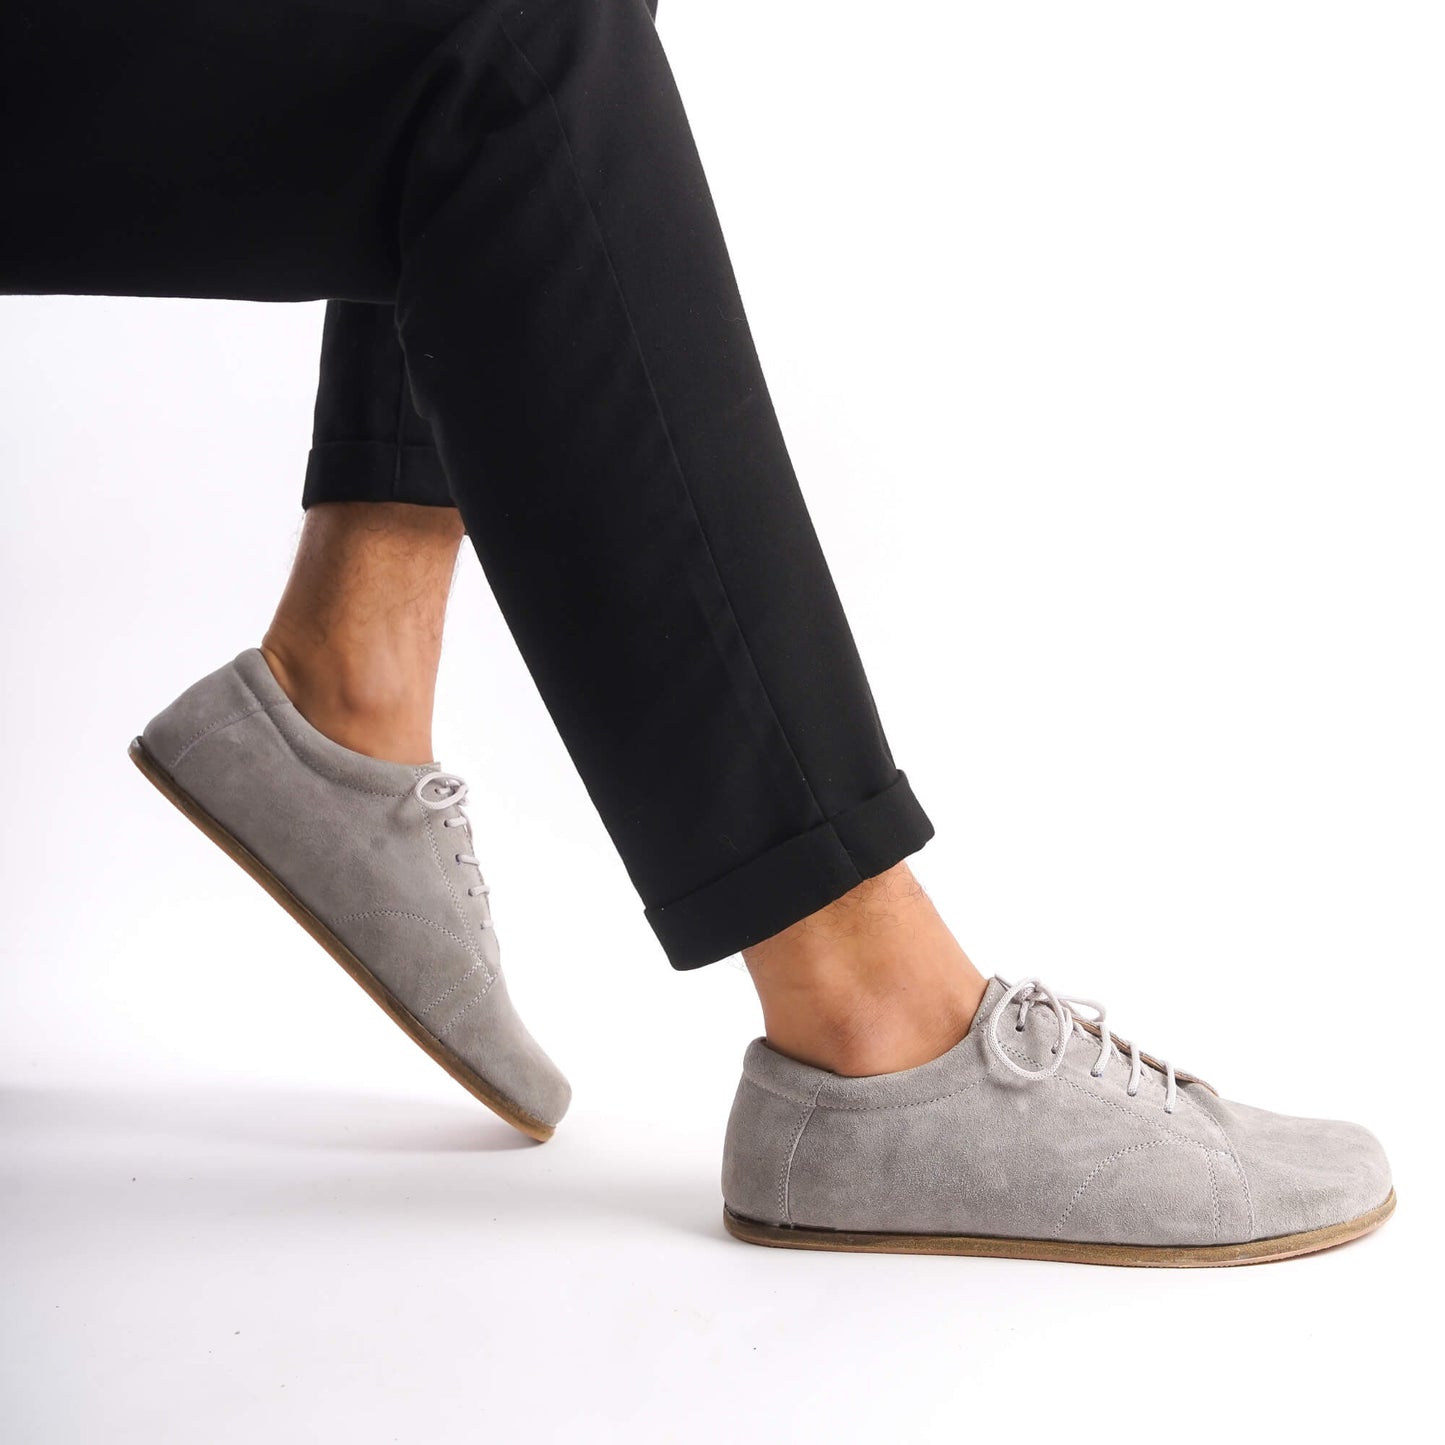 Comfortable gray suede men's barefoot sneakers, featuring minimalist design and zero-drop sole.